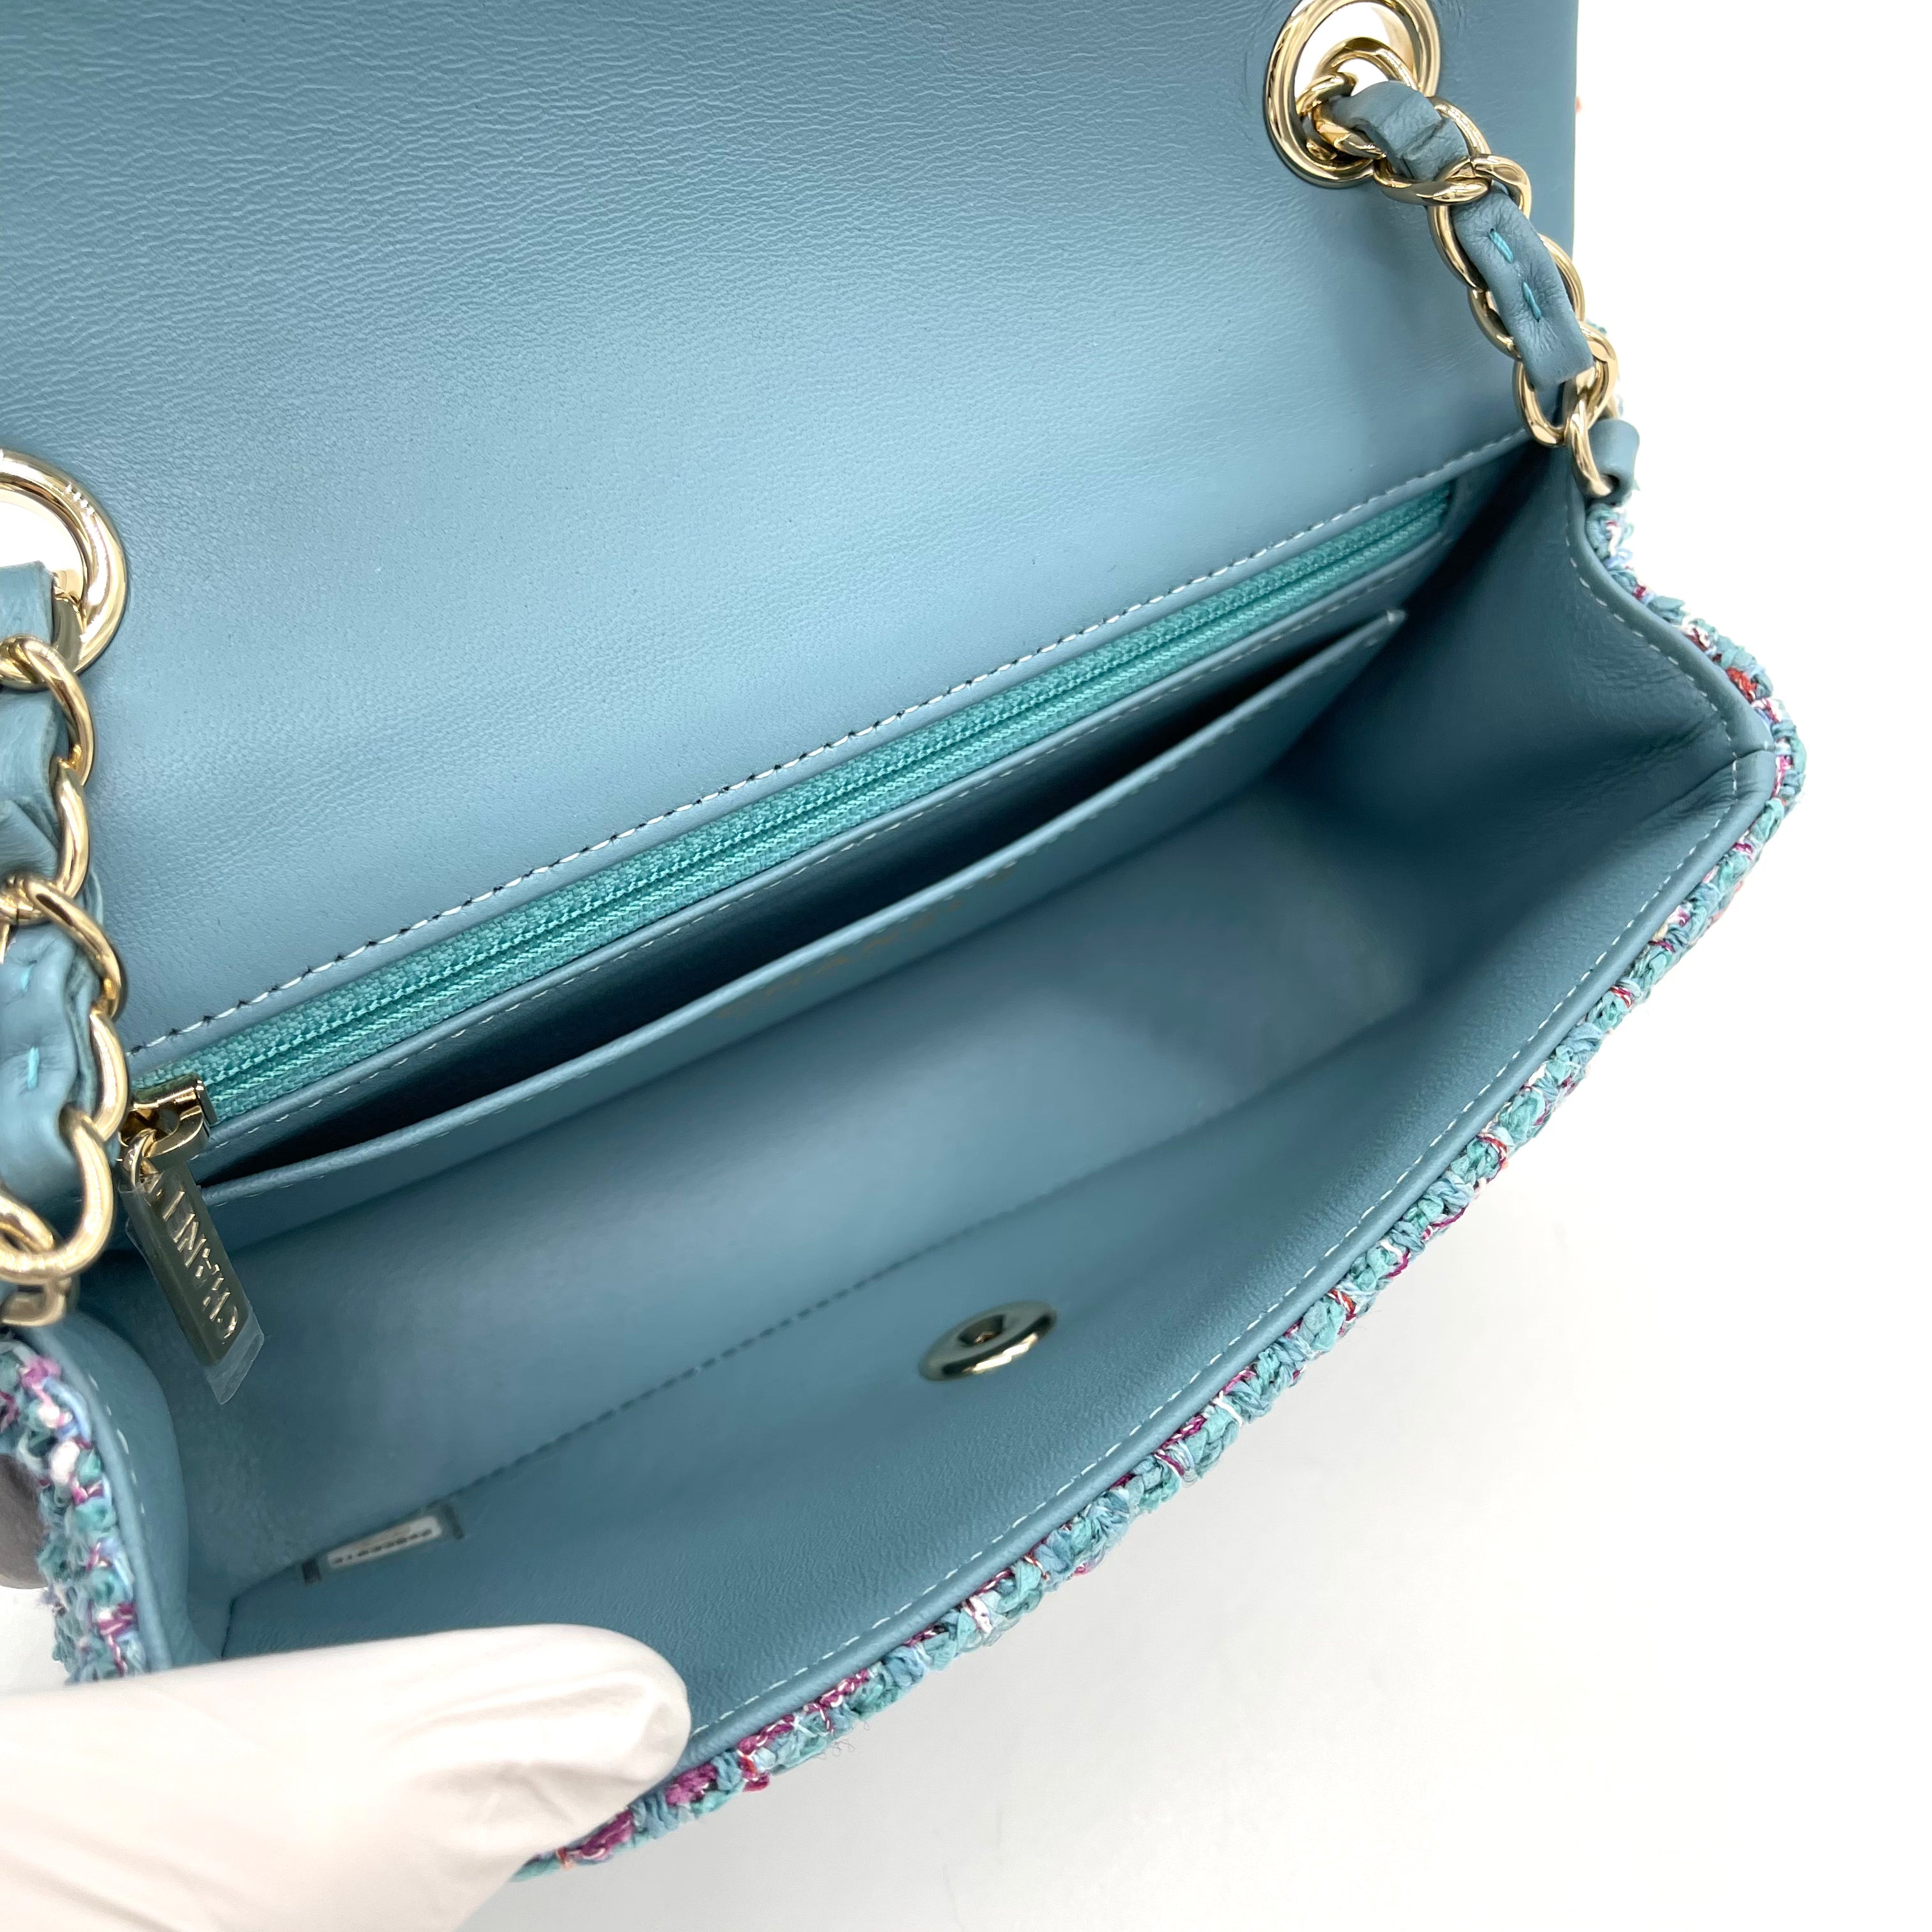 CHANEL Mini Rectangular Flap Bag in 21S Blue Tweed